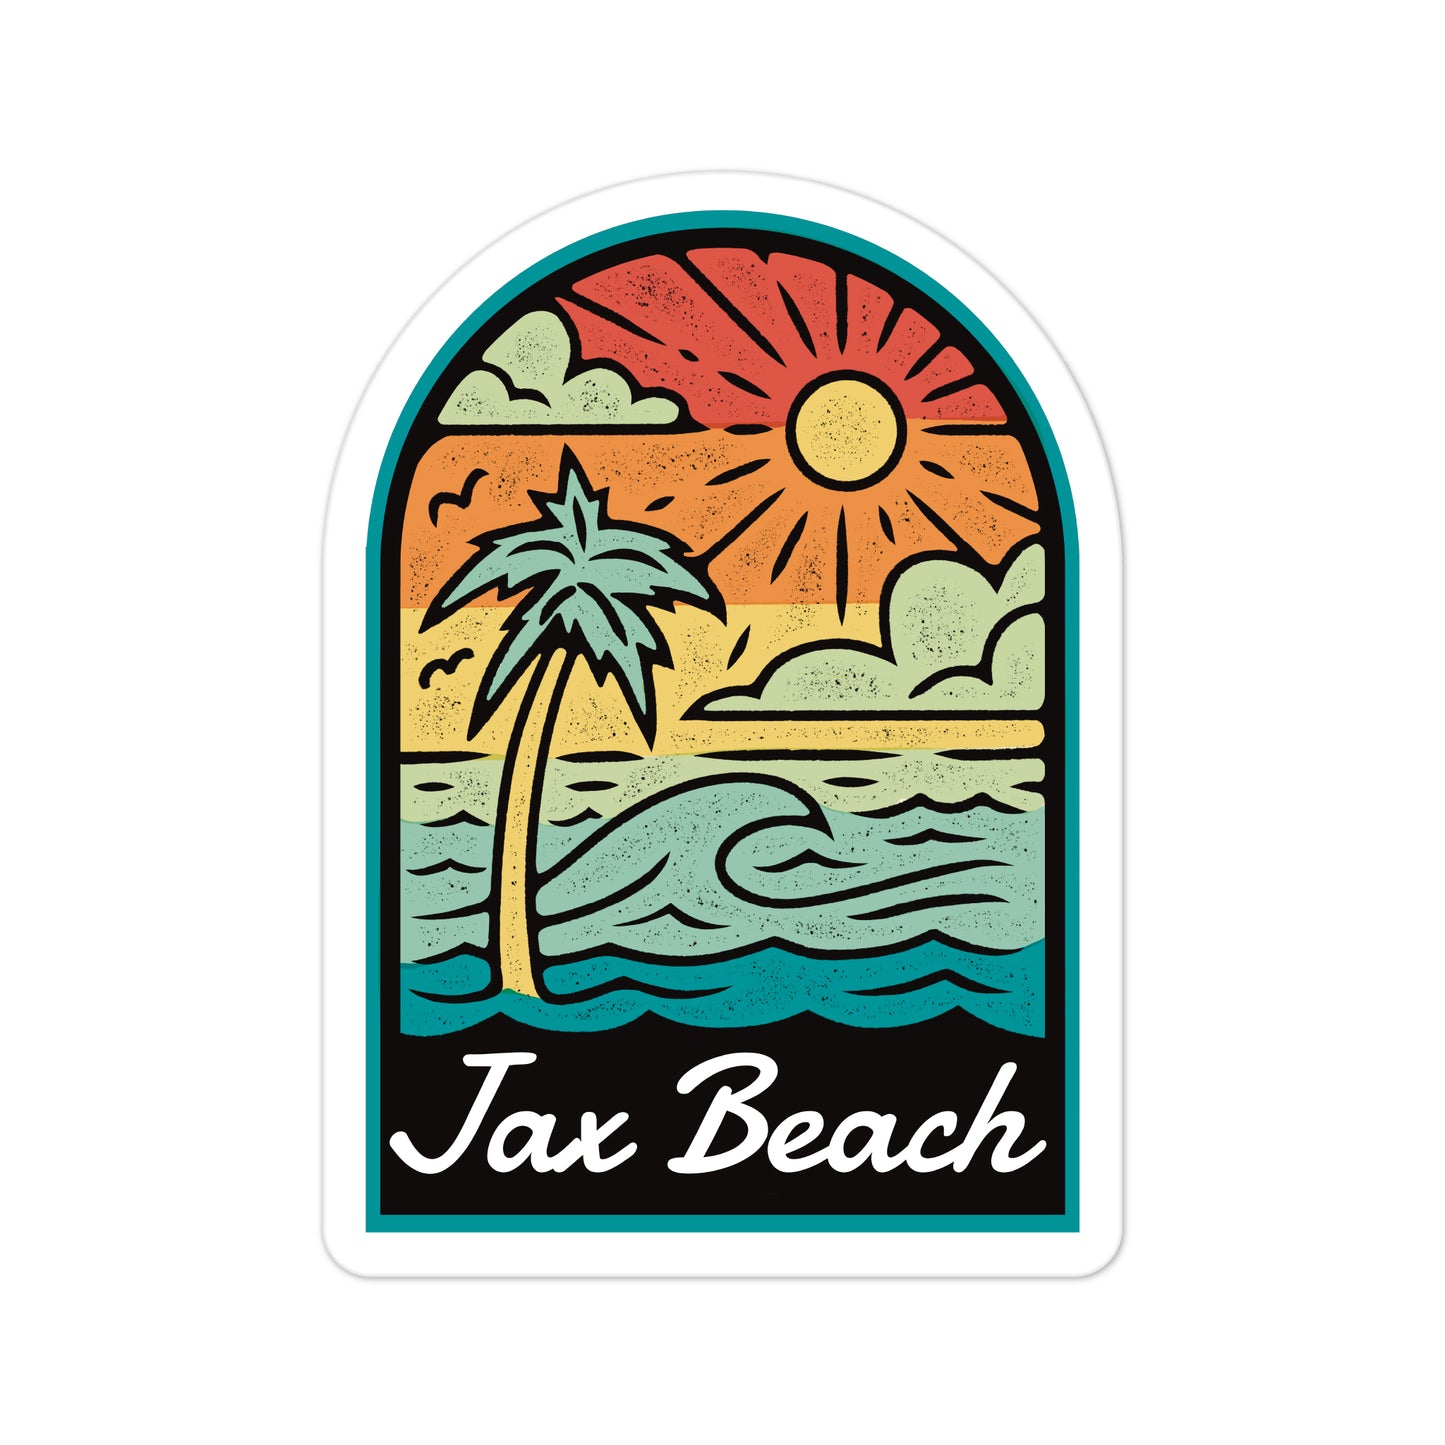 A sticker of Jacksonville Beach